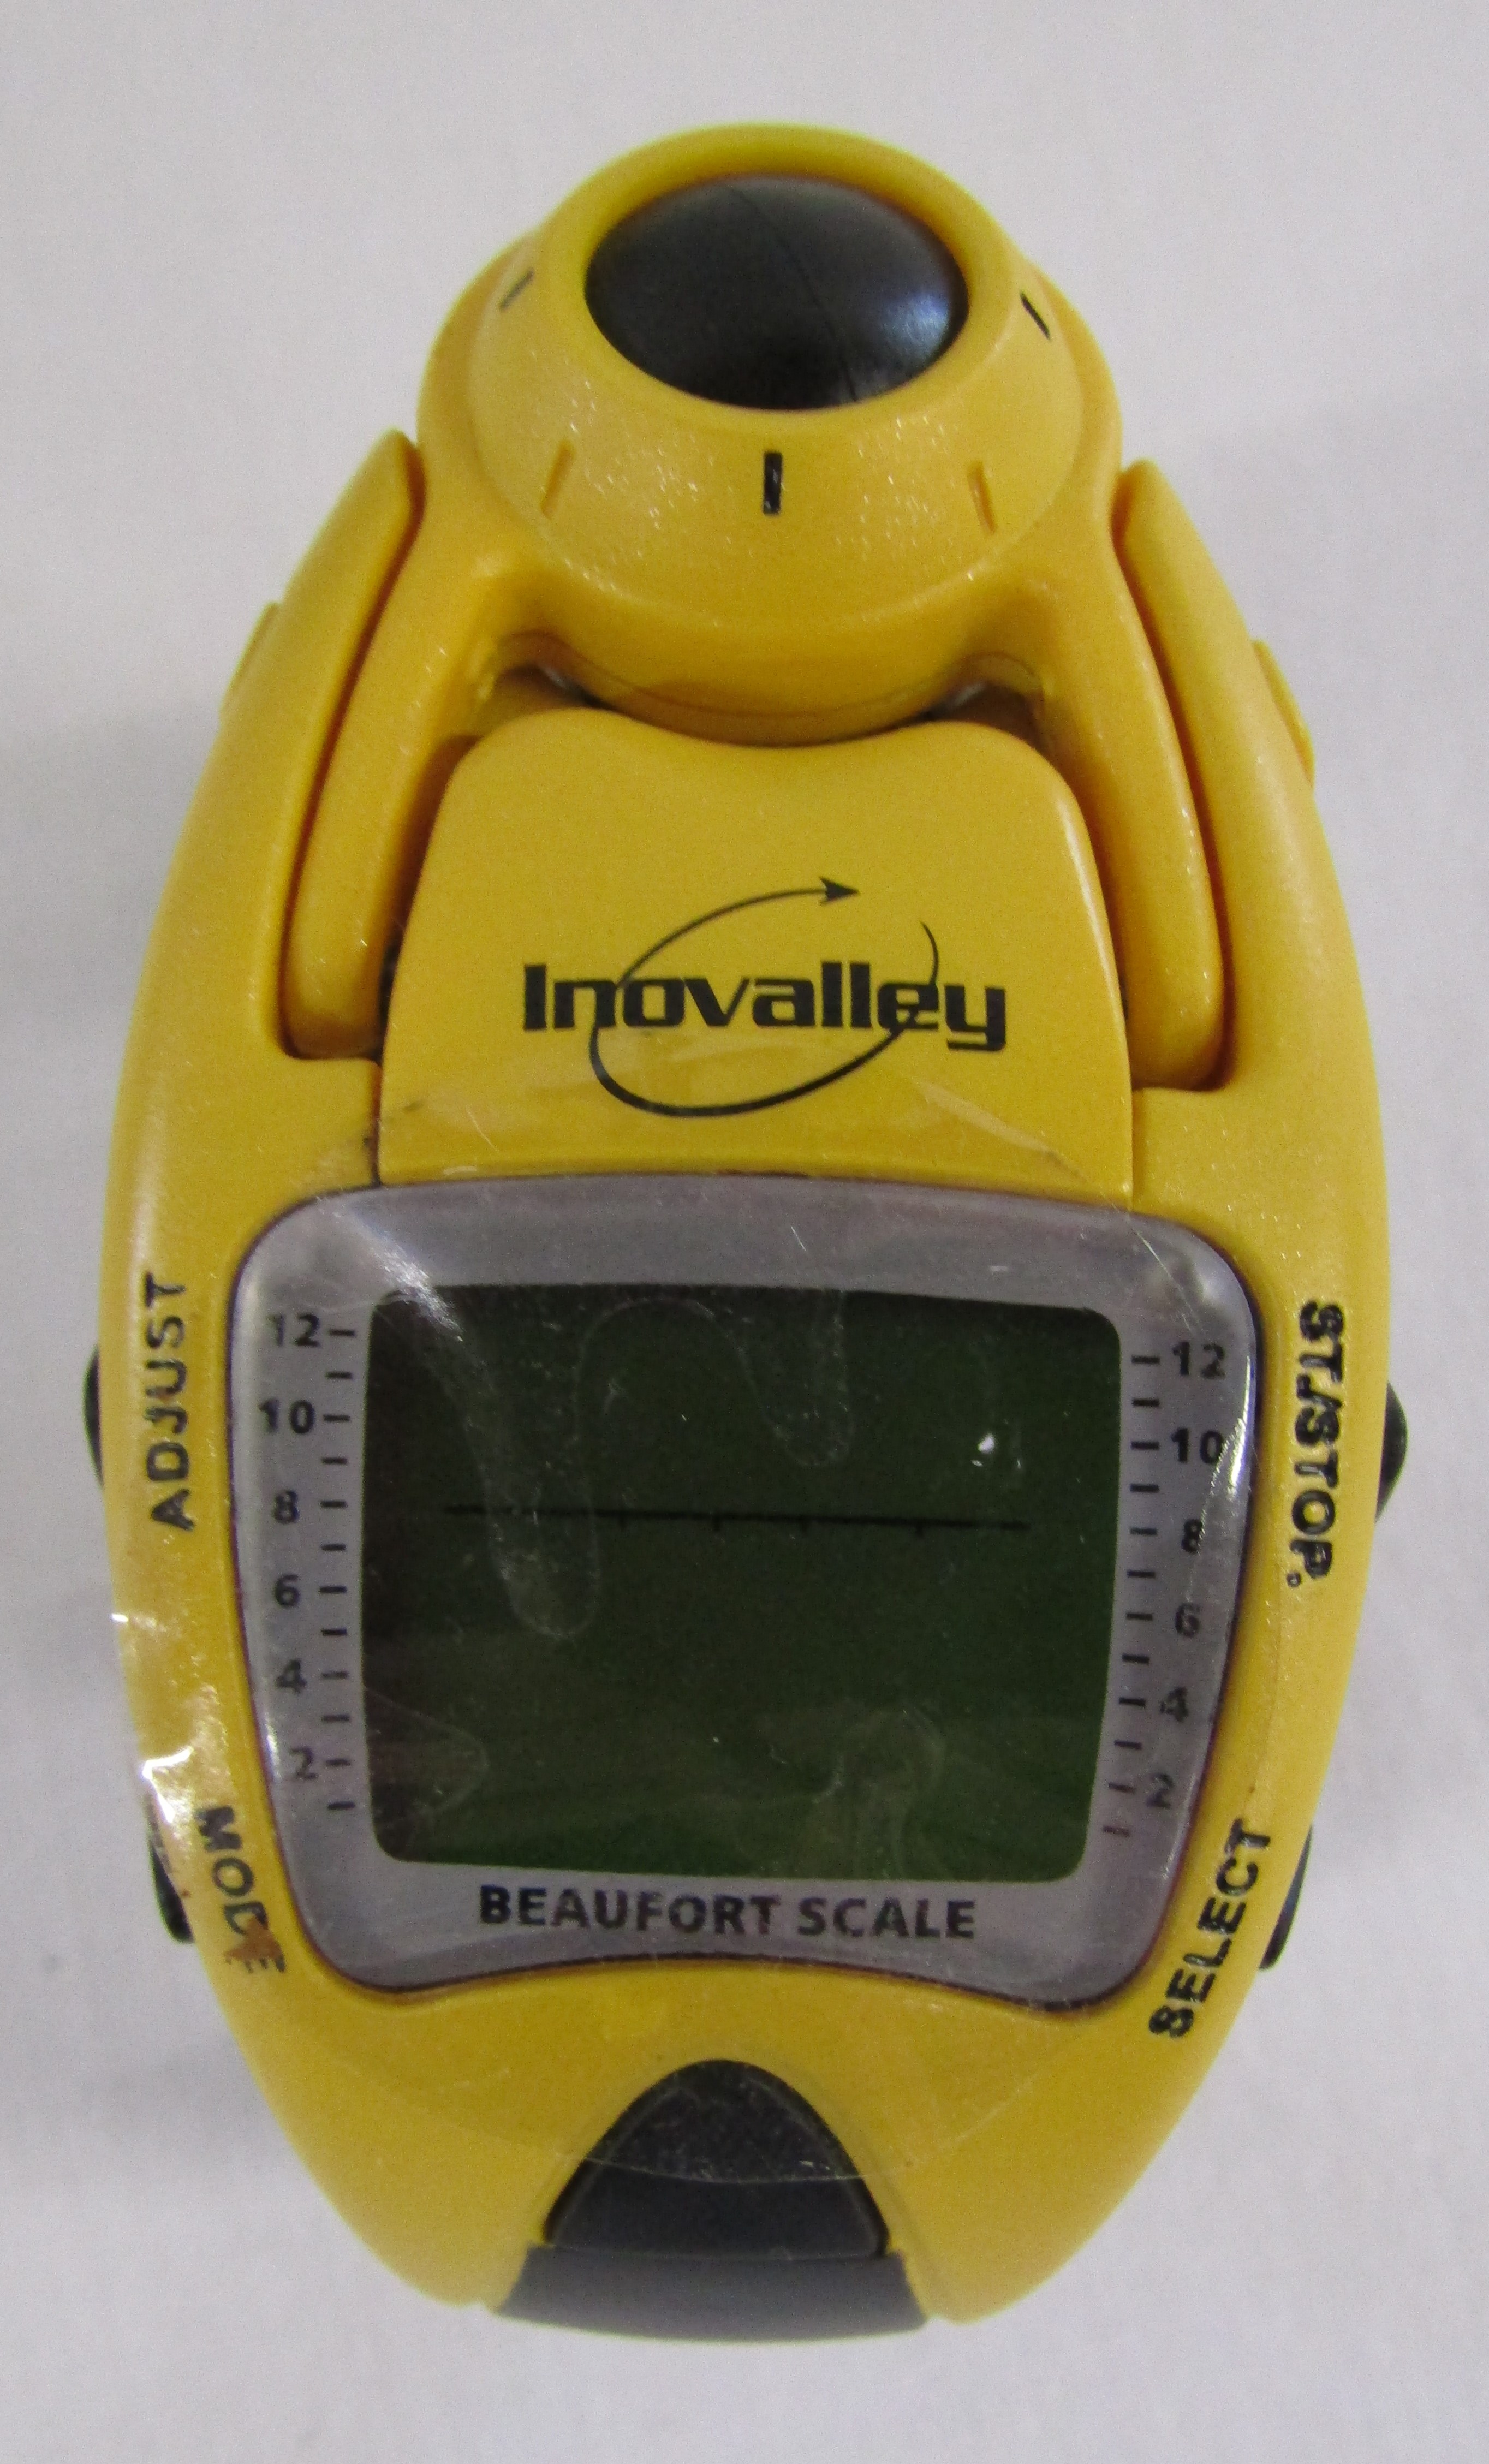 Addies MY-1605 utility sports watch and Inovalley anemomitor windmaster watch - Image 5 of 6